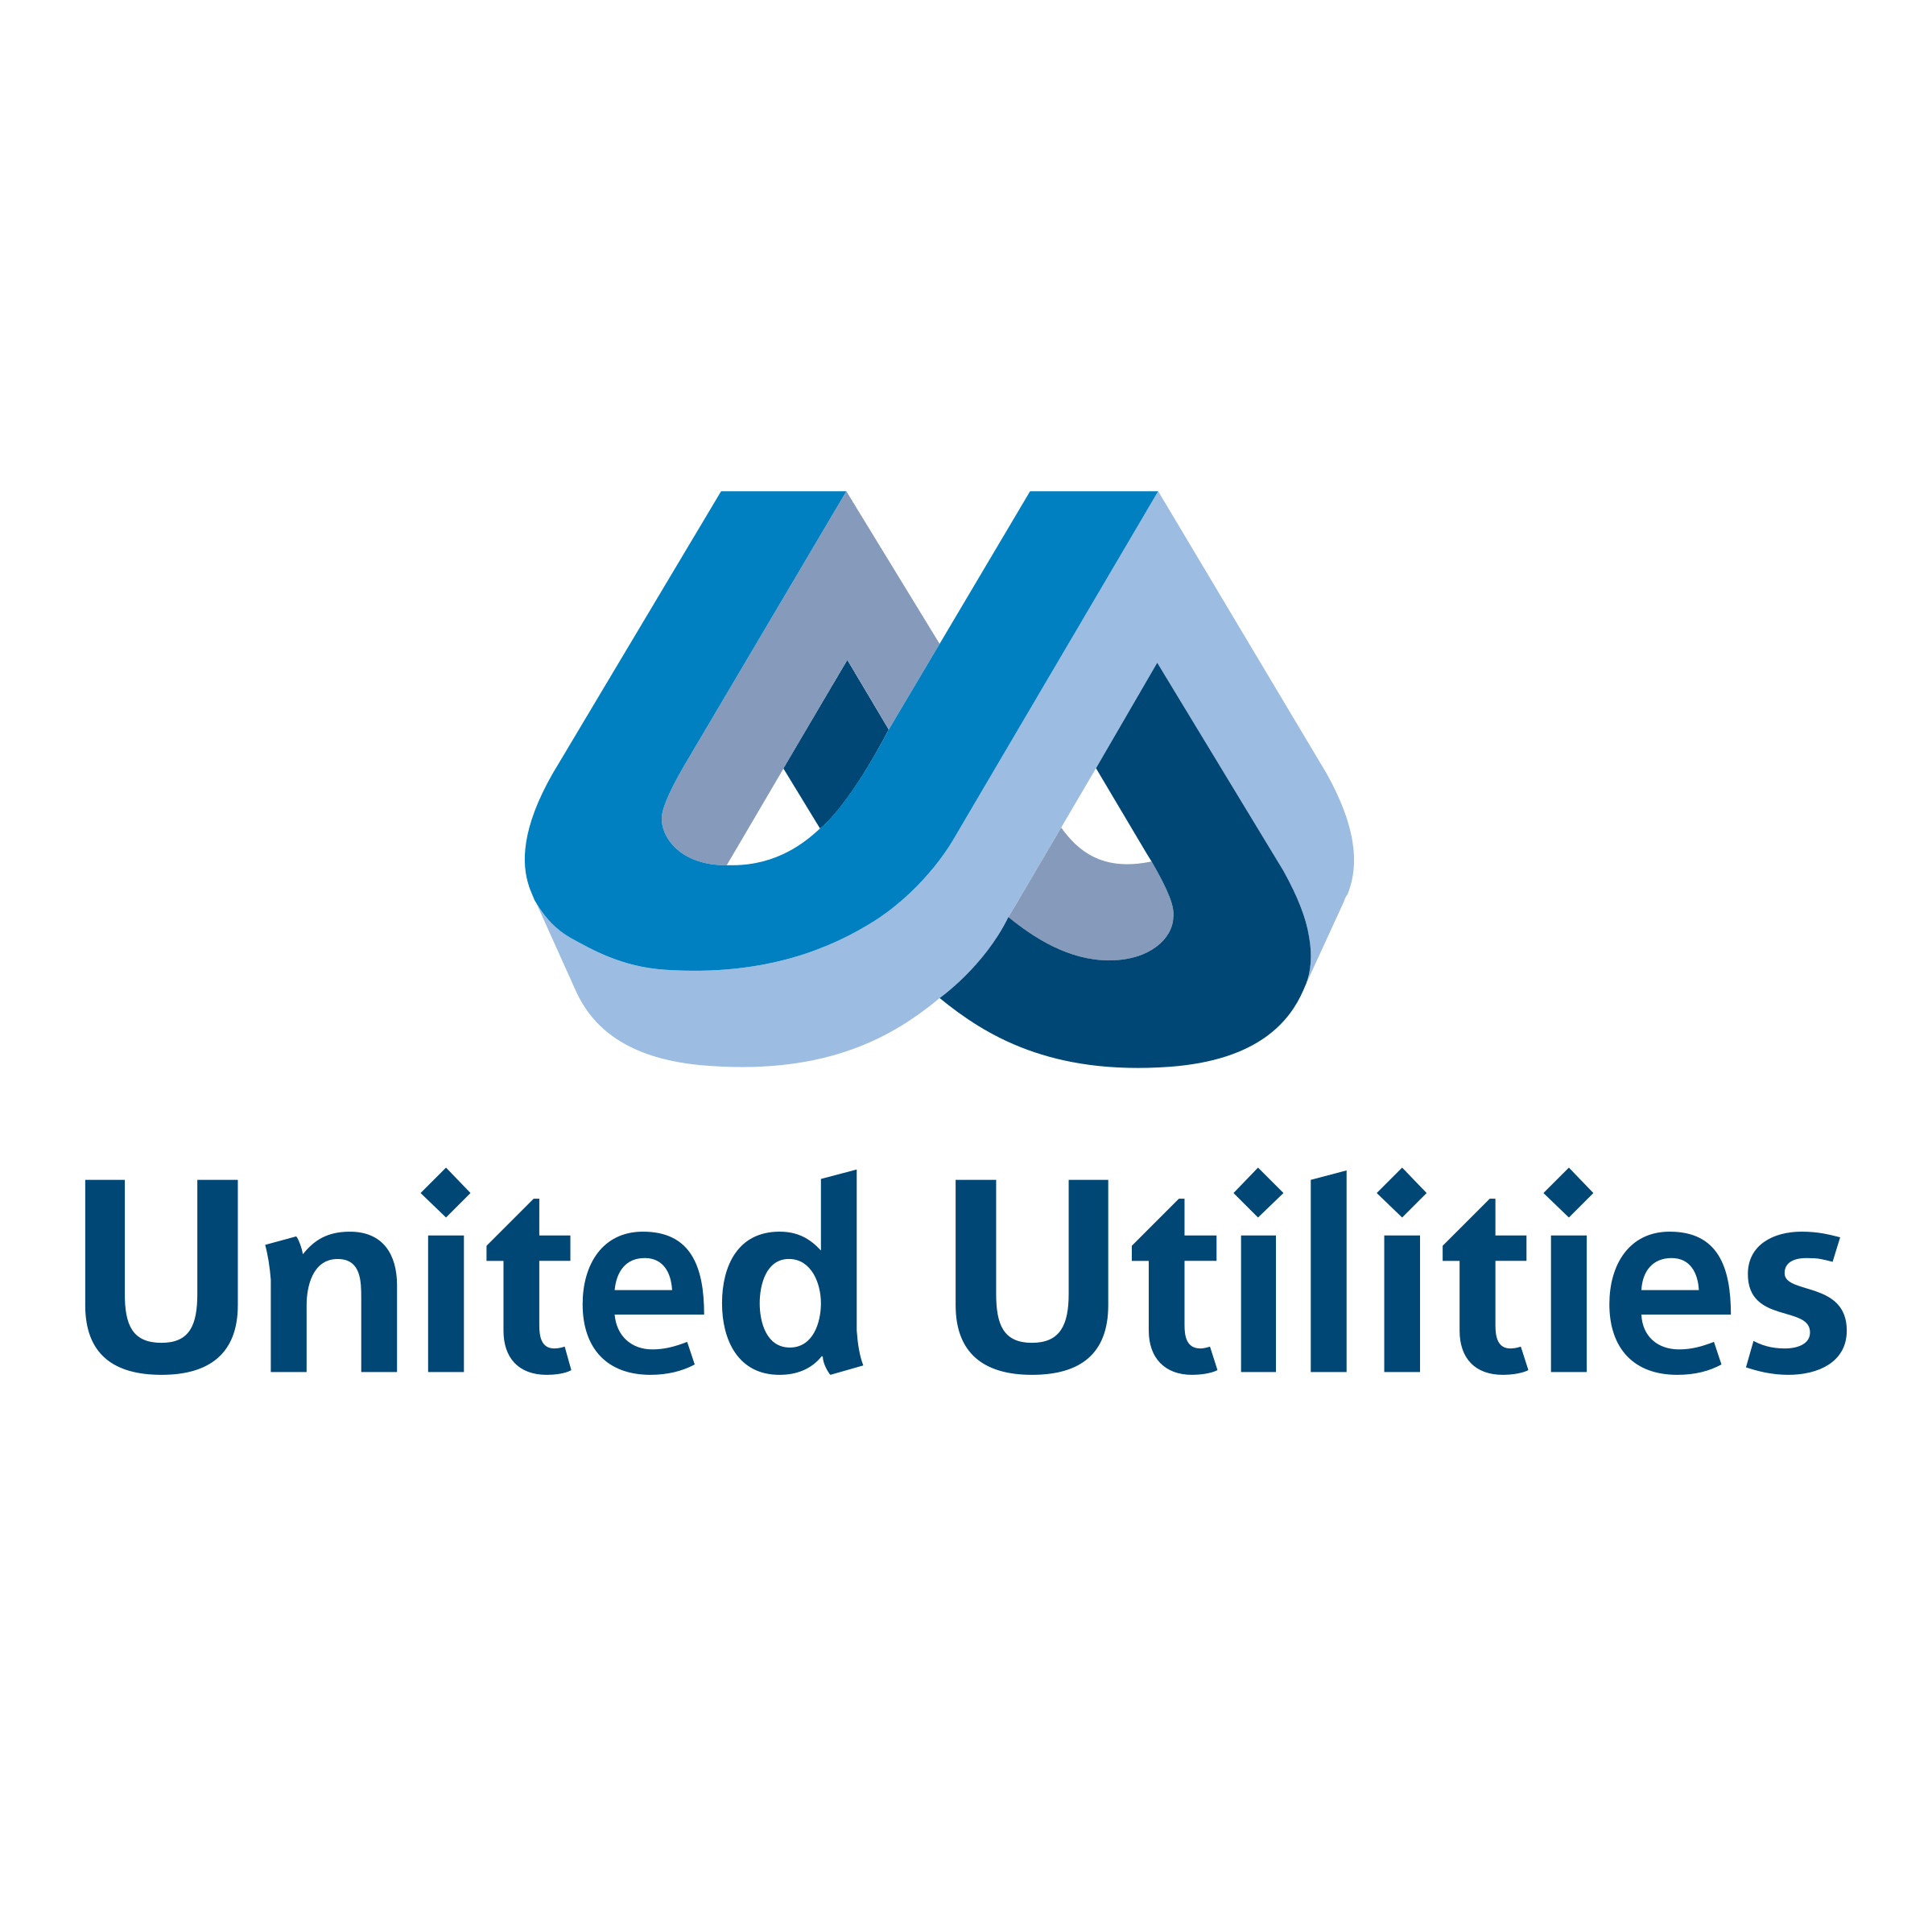 Utilities Logo - United Utilities Logo PNG Transparent & SVG Vector - Freebie Supply